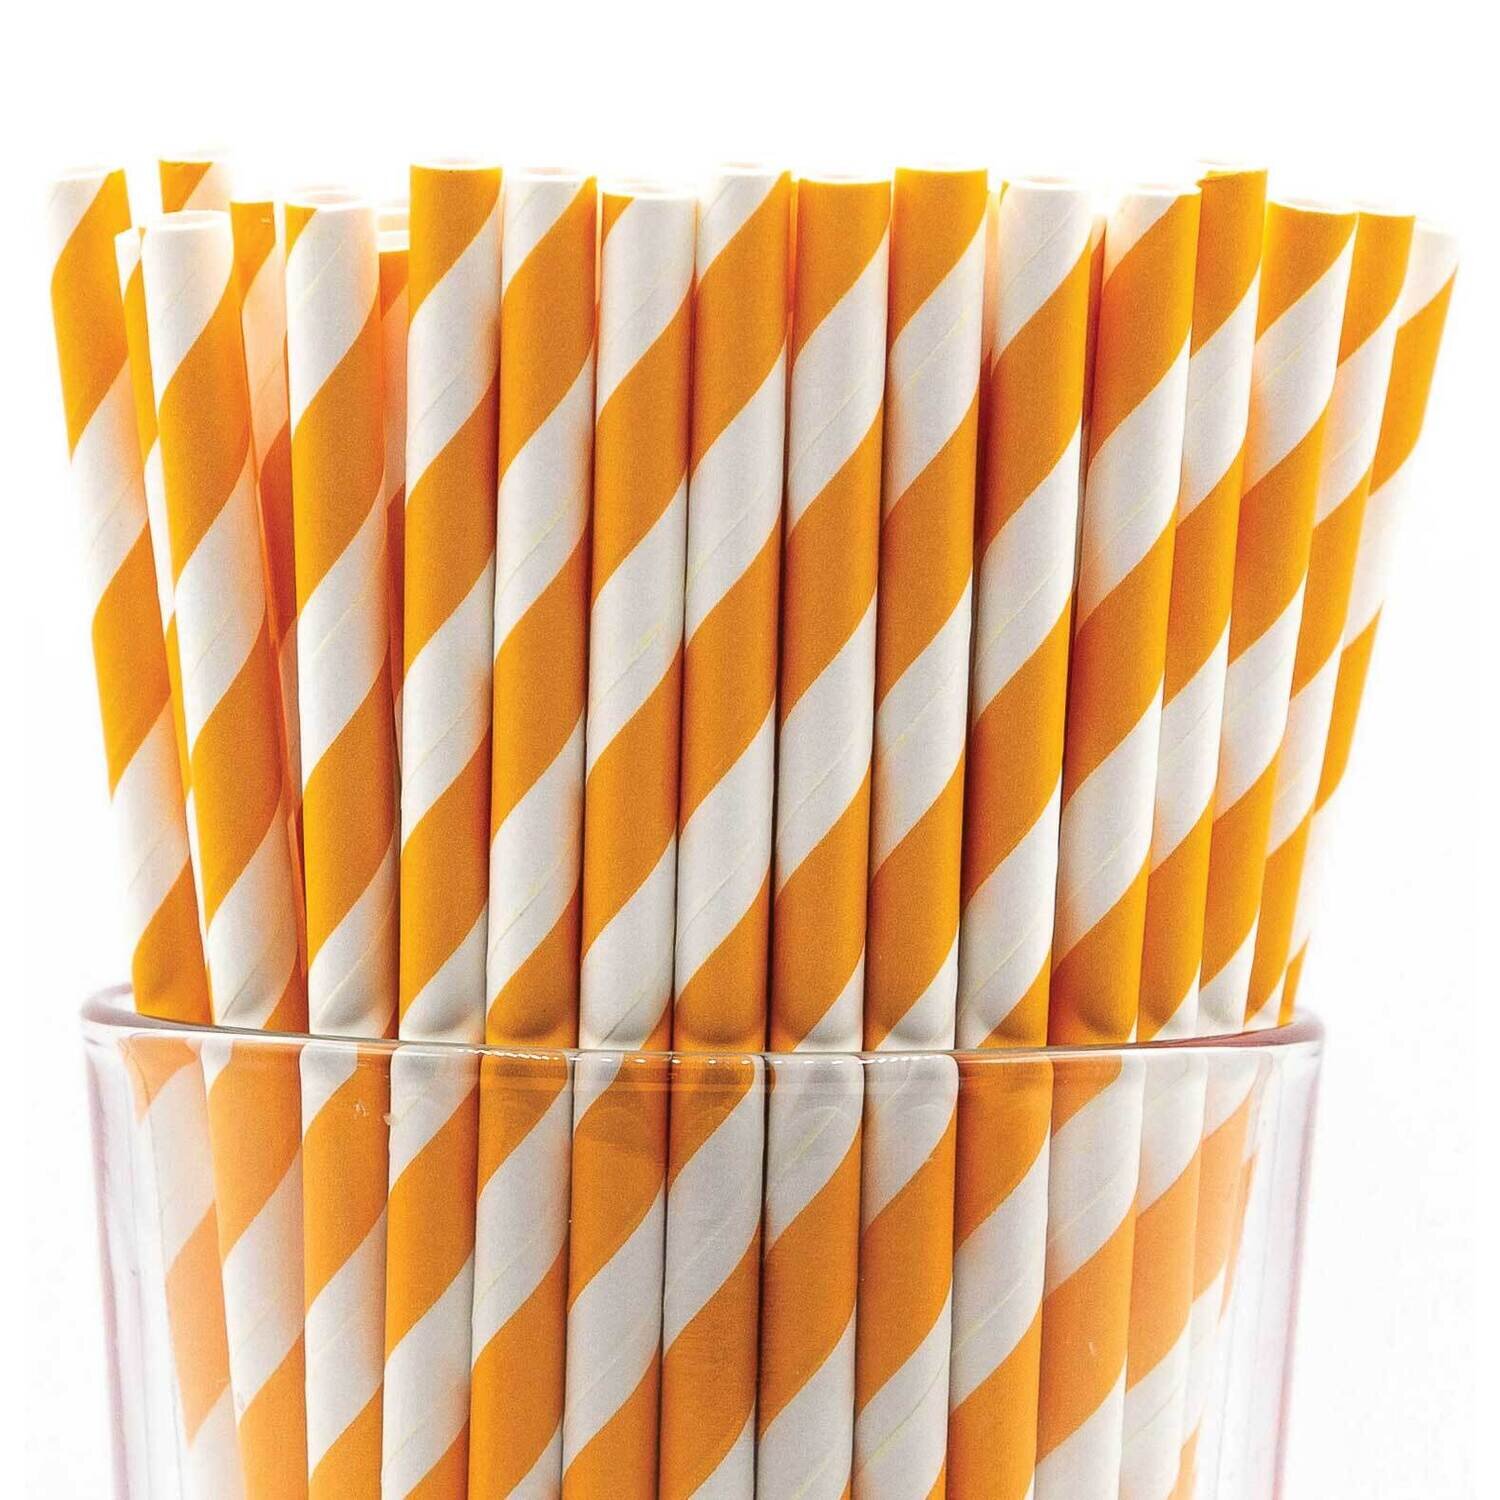 Pack of 150 Orange Wide Stripe Bio-degradable Paper Straws GM22630